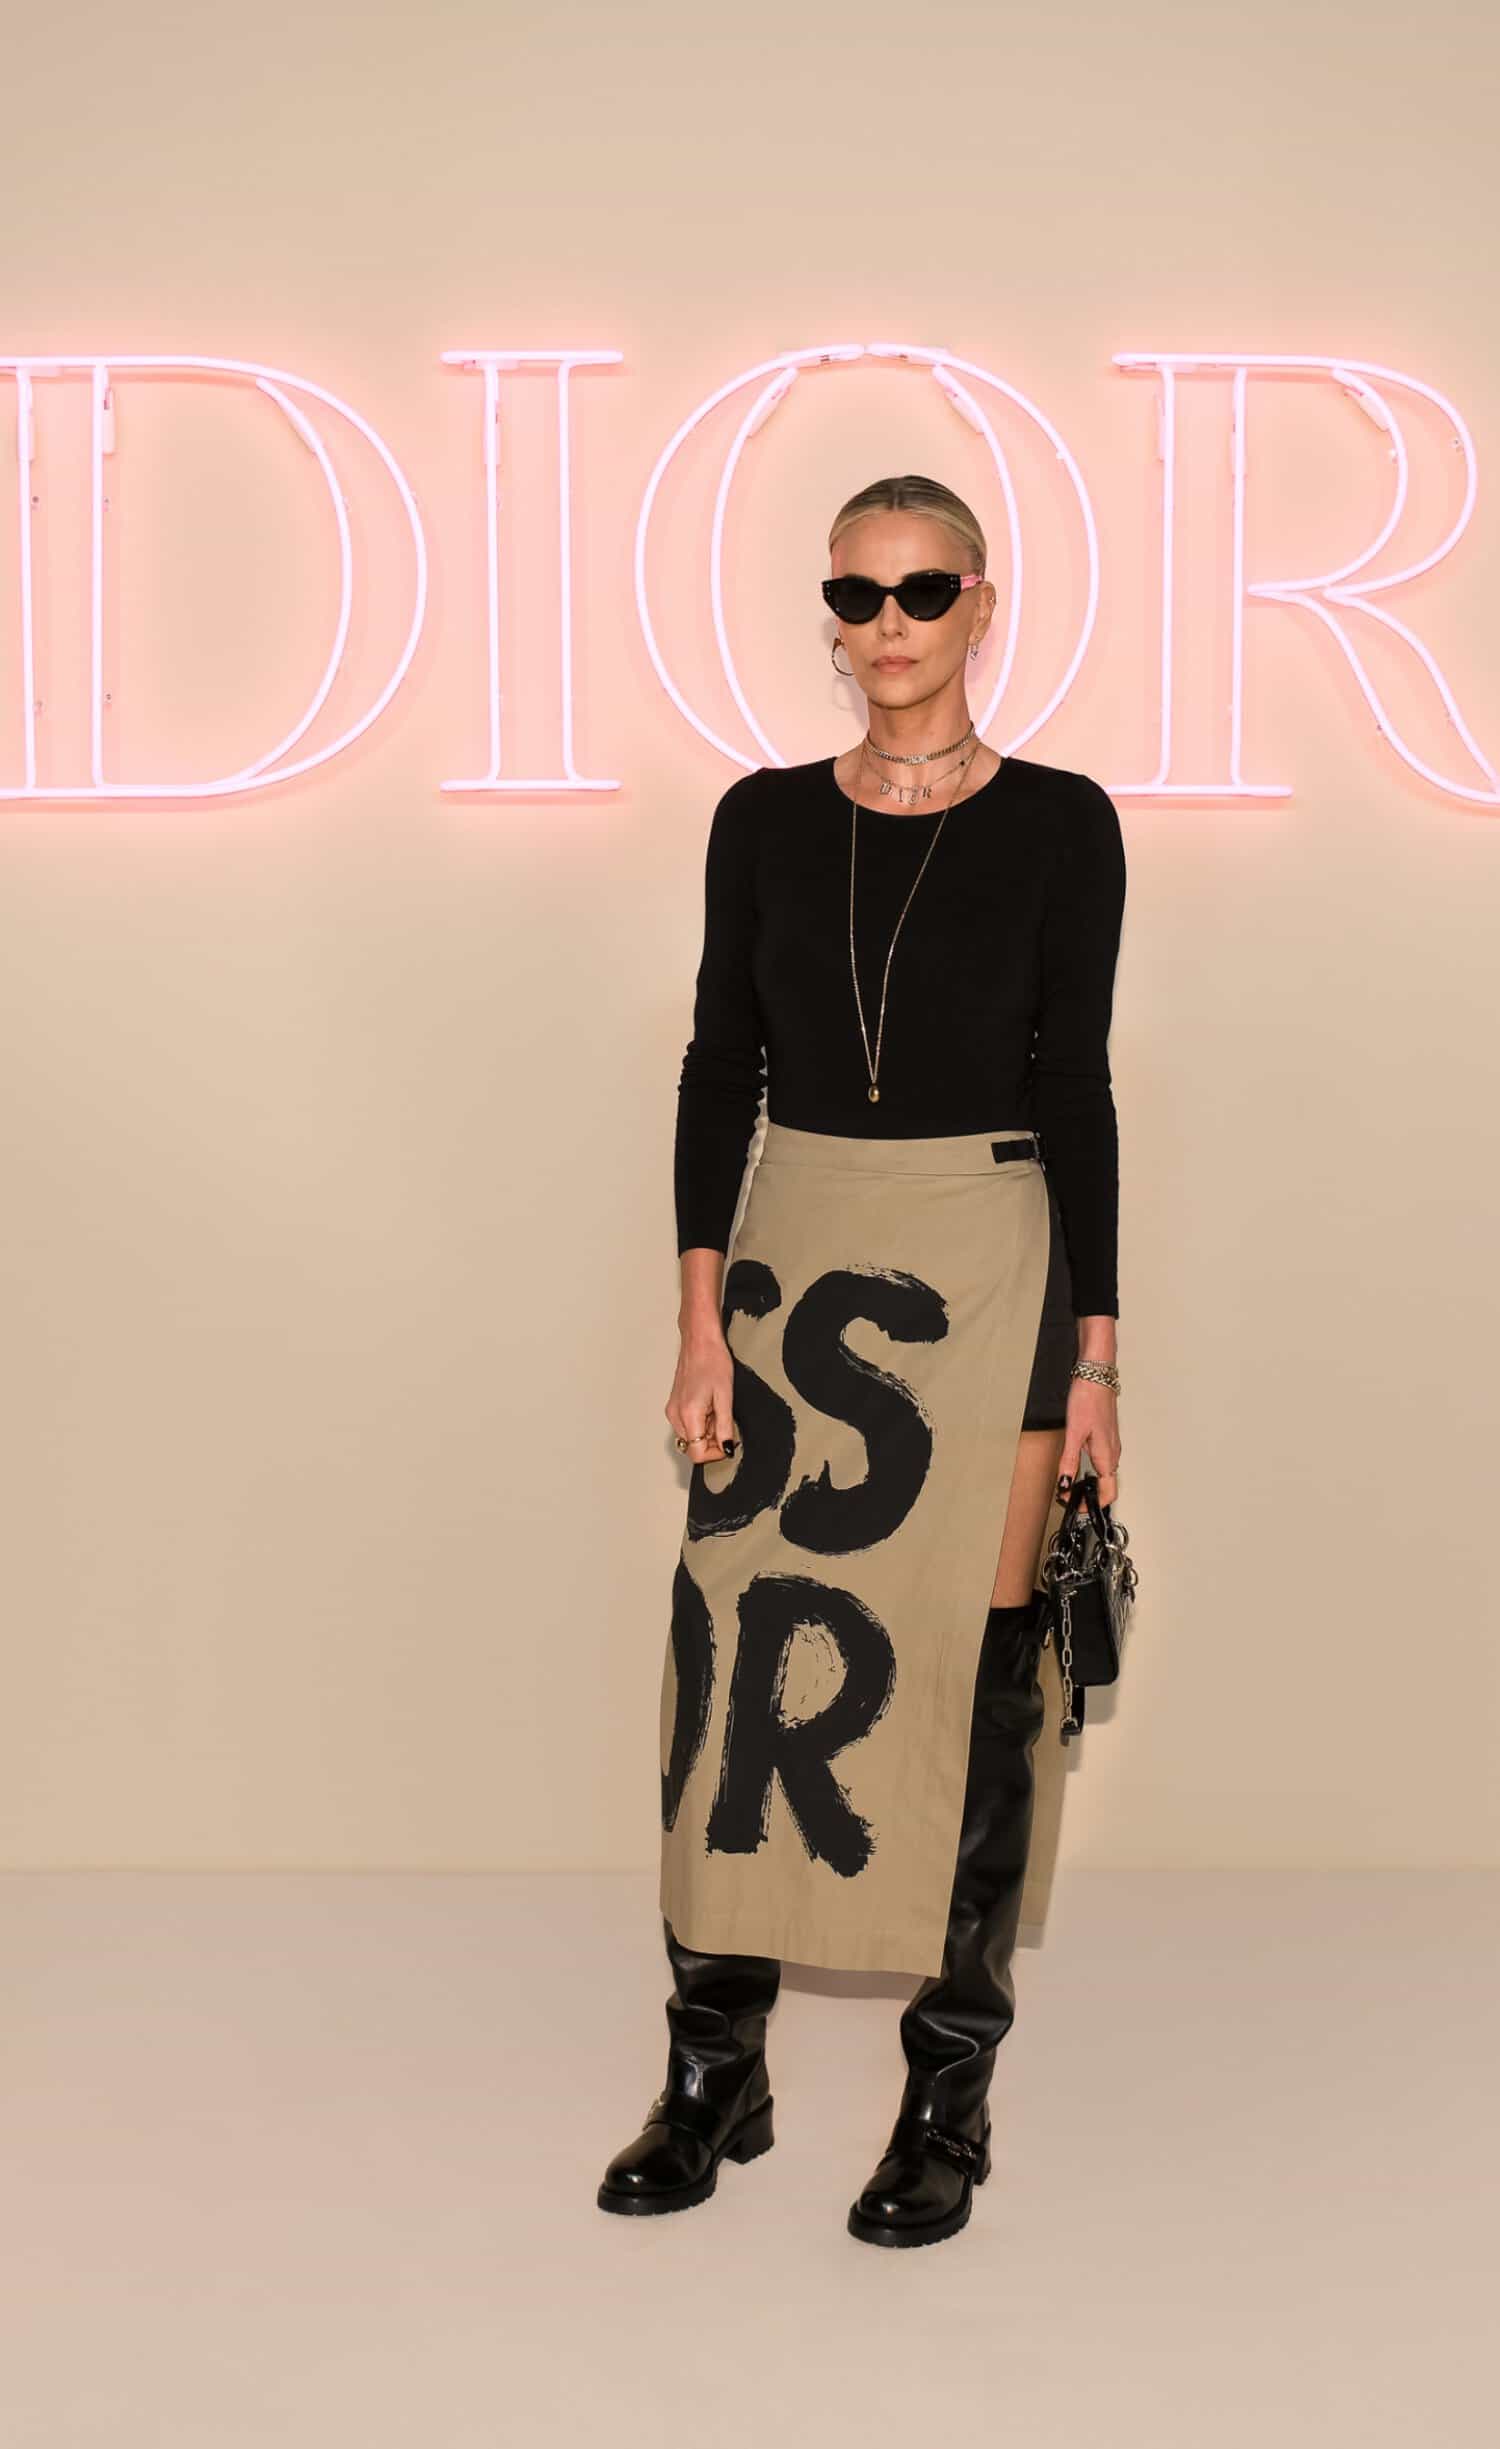 Dior, fashion show, New York City, Charlize Theron